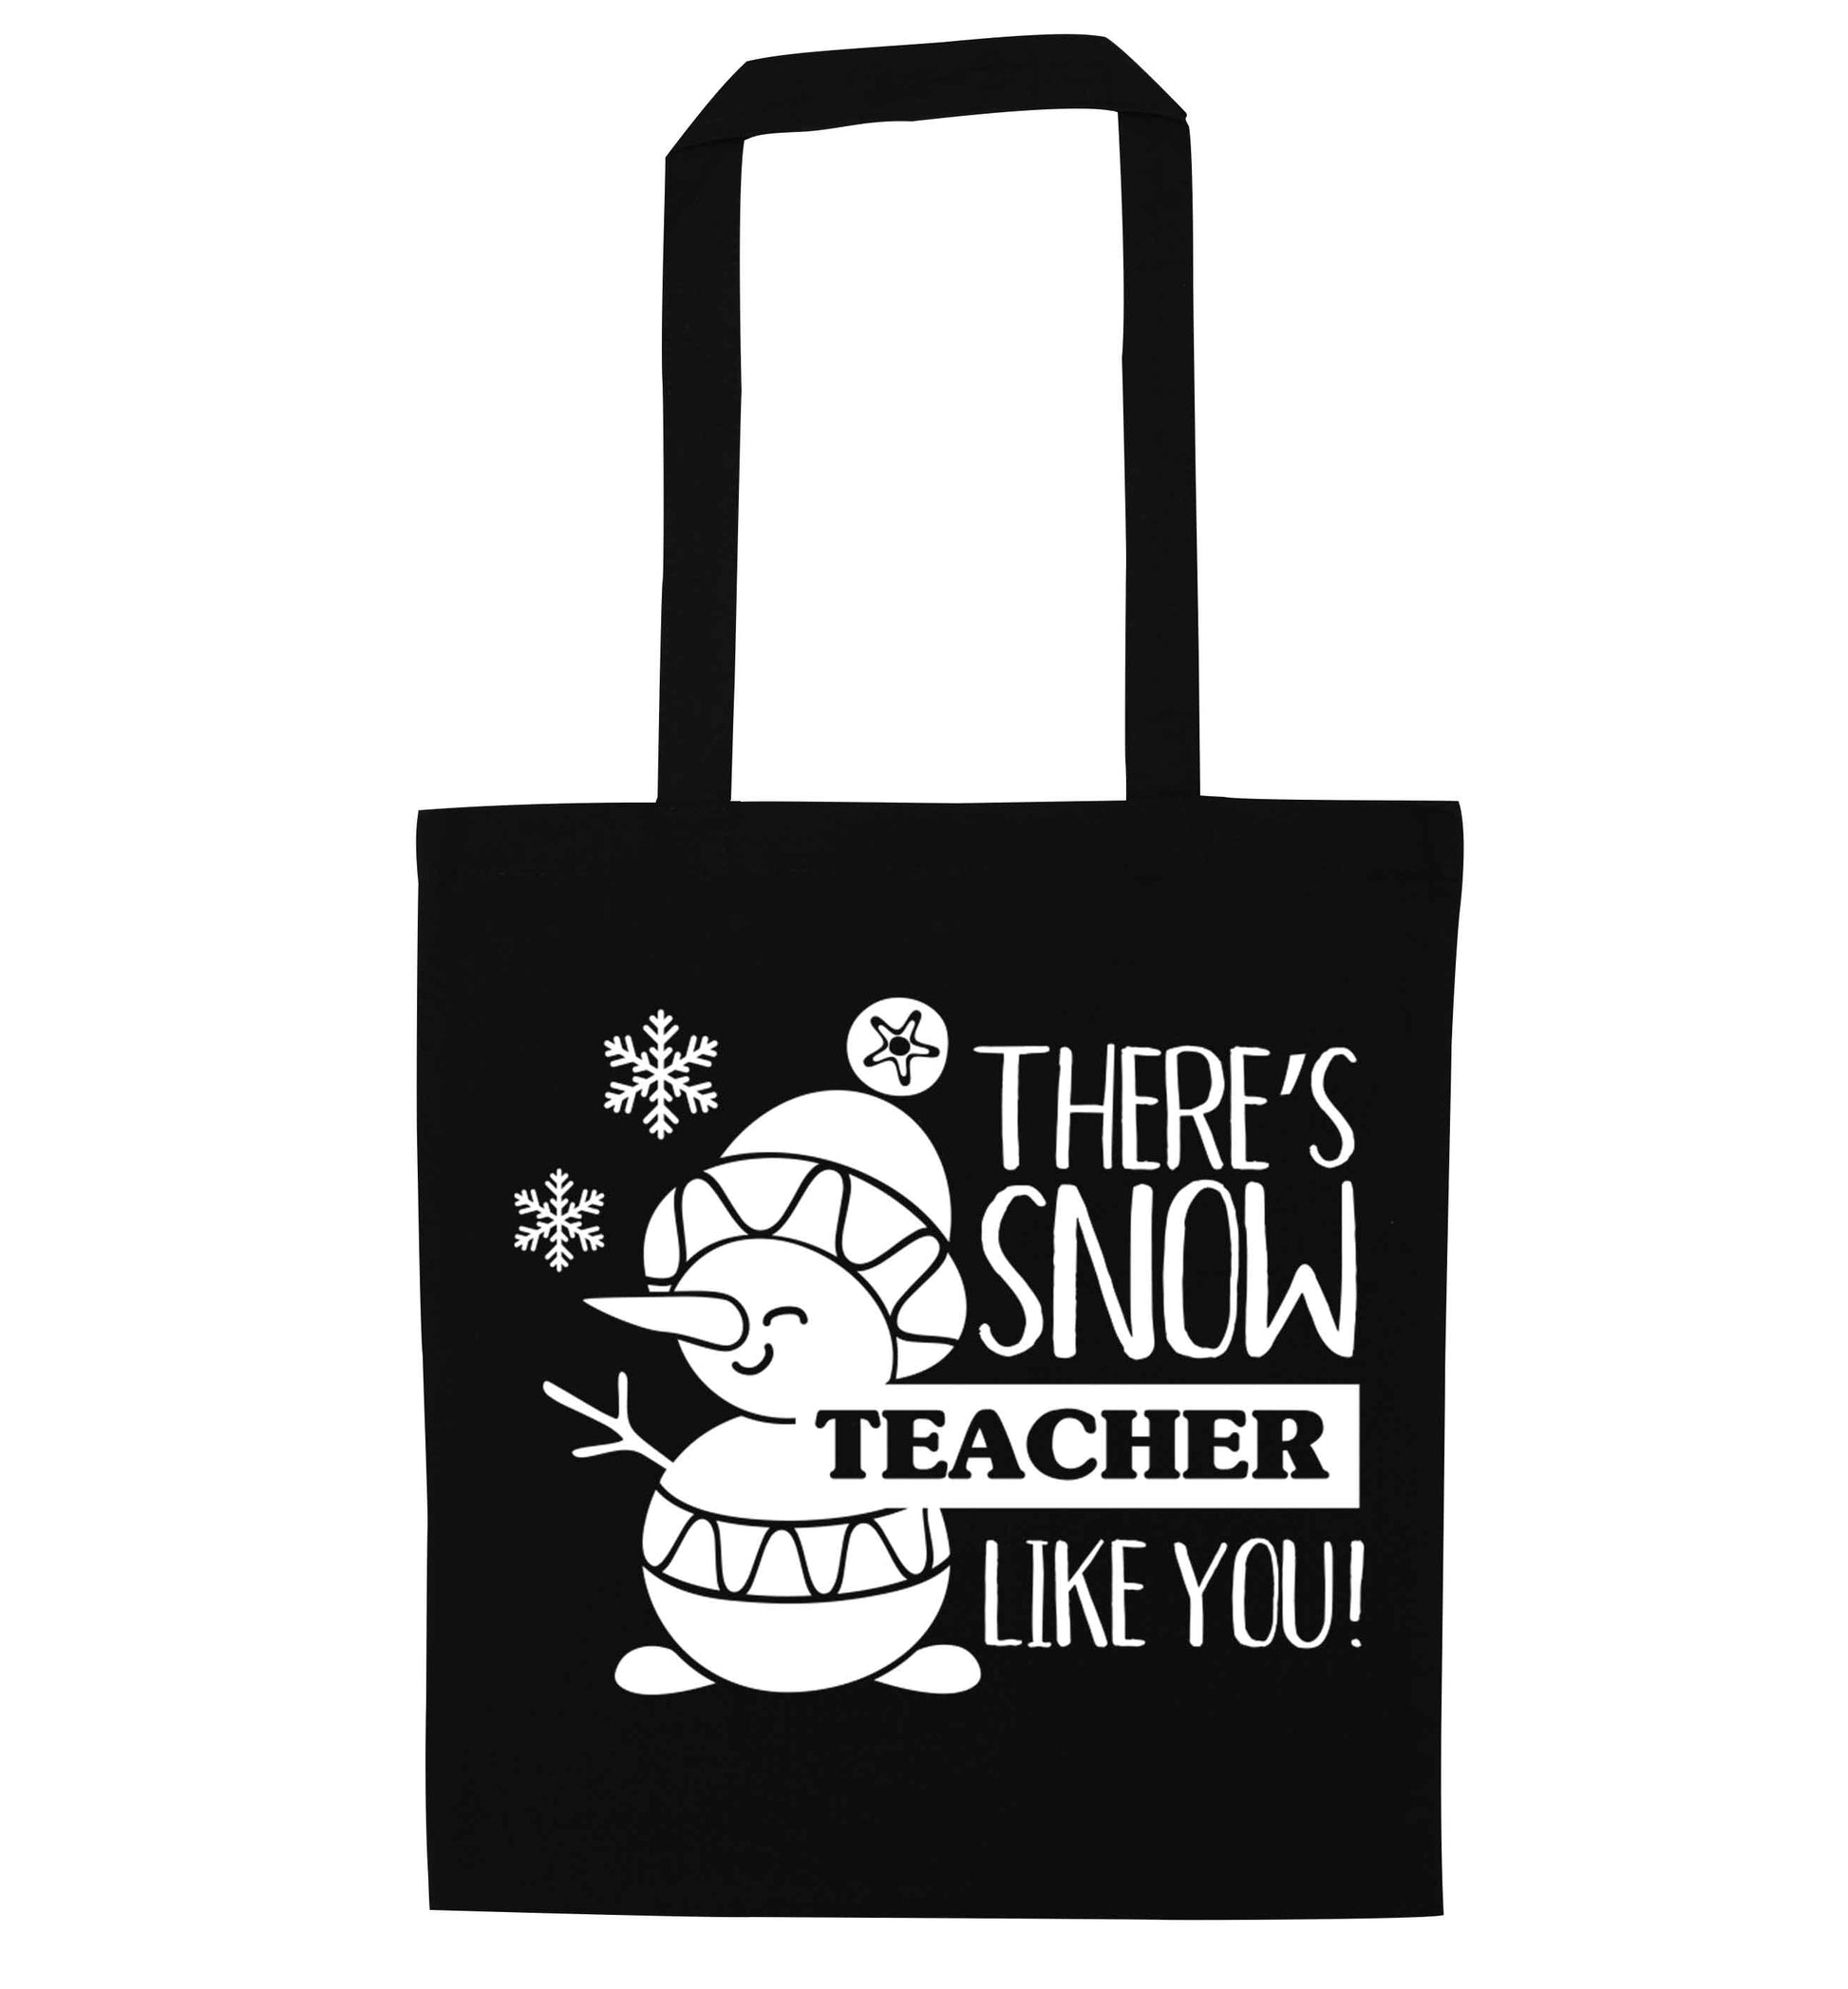 There's snow teacher like you black tote bag